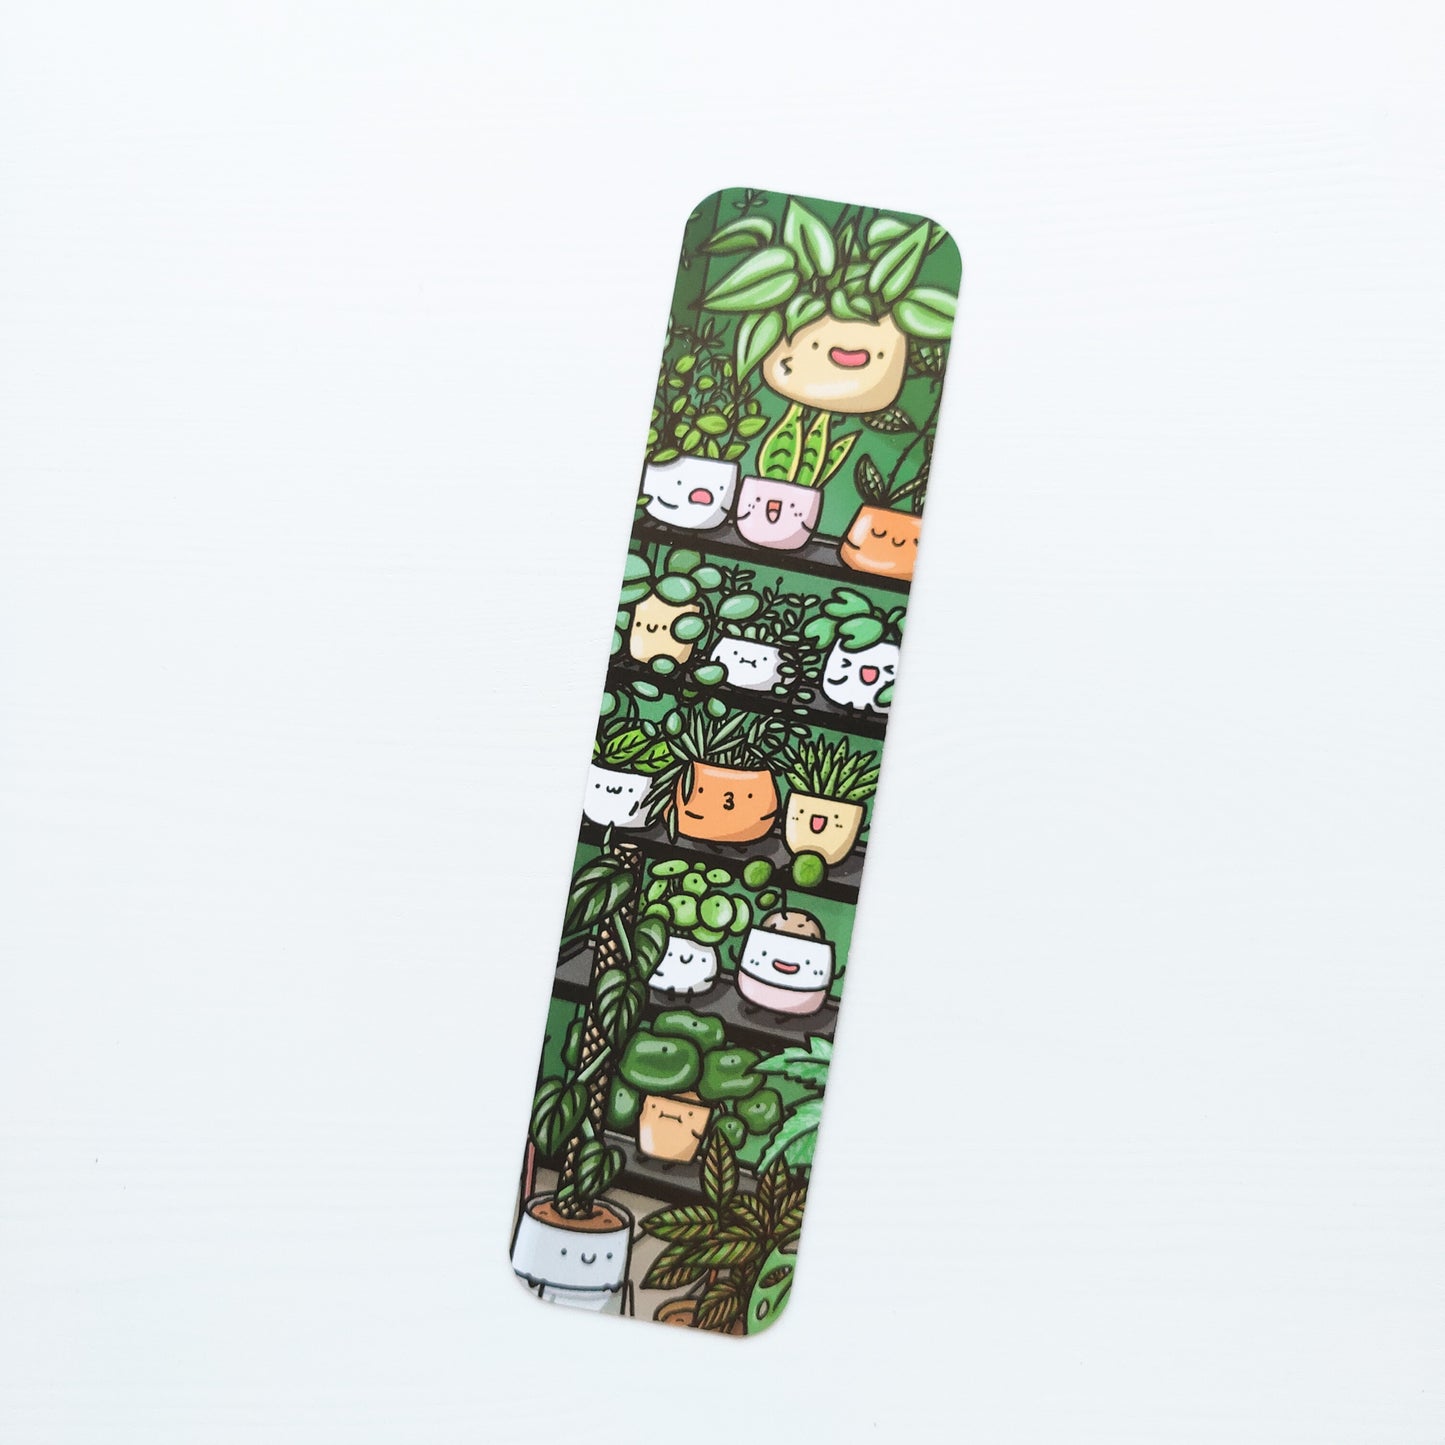 Bookmark "Jungle Vibes"